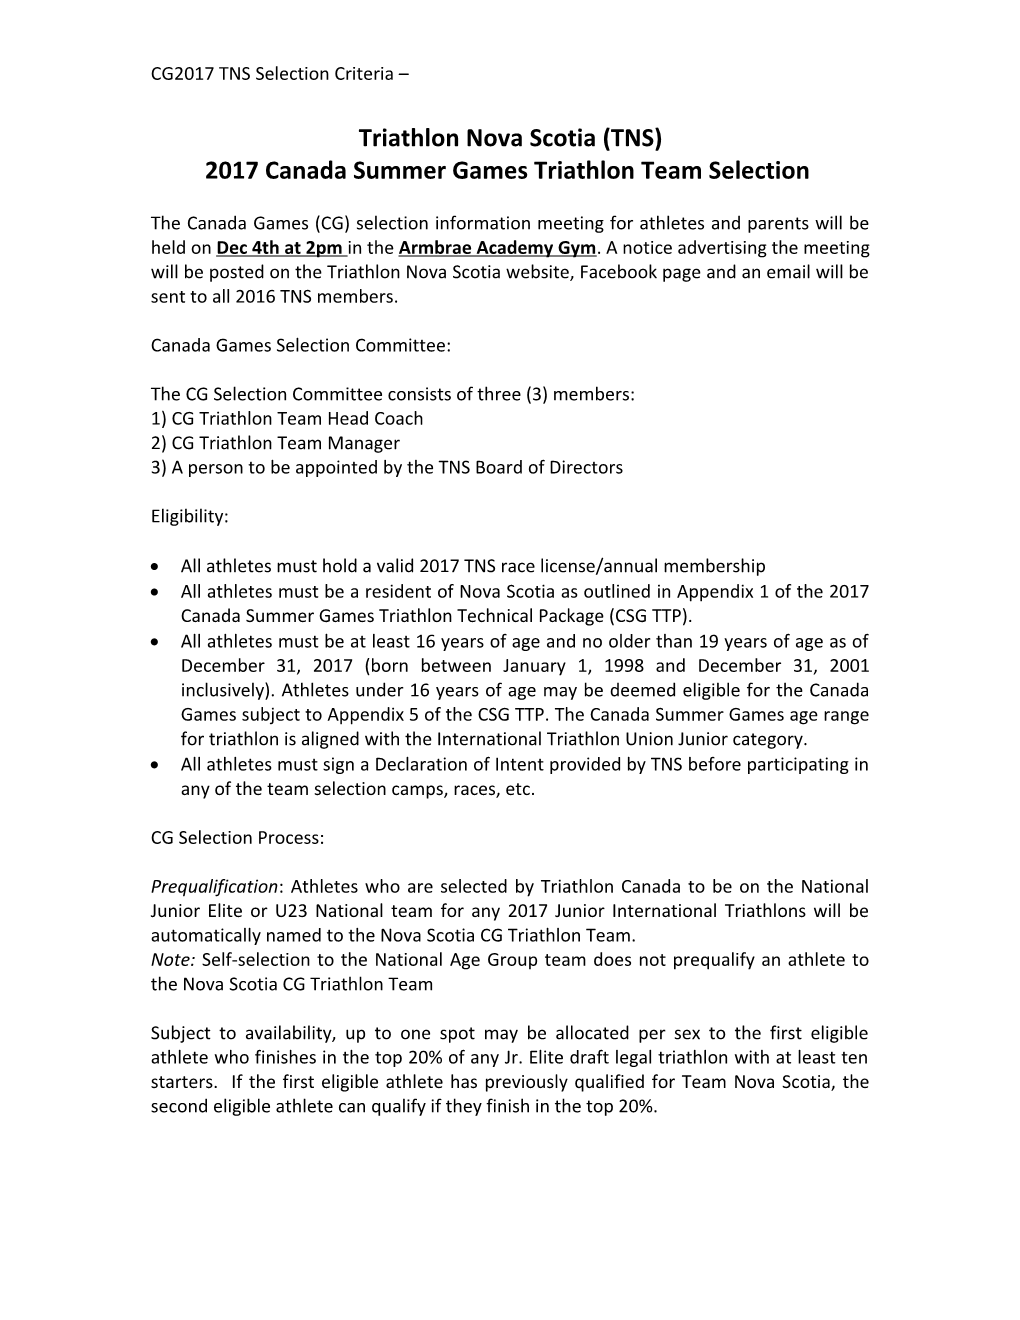 2017 Canada Summer Games Triathlon Team Selection